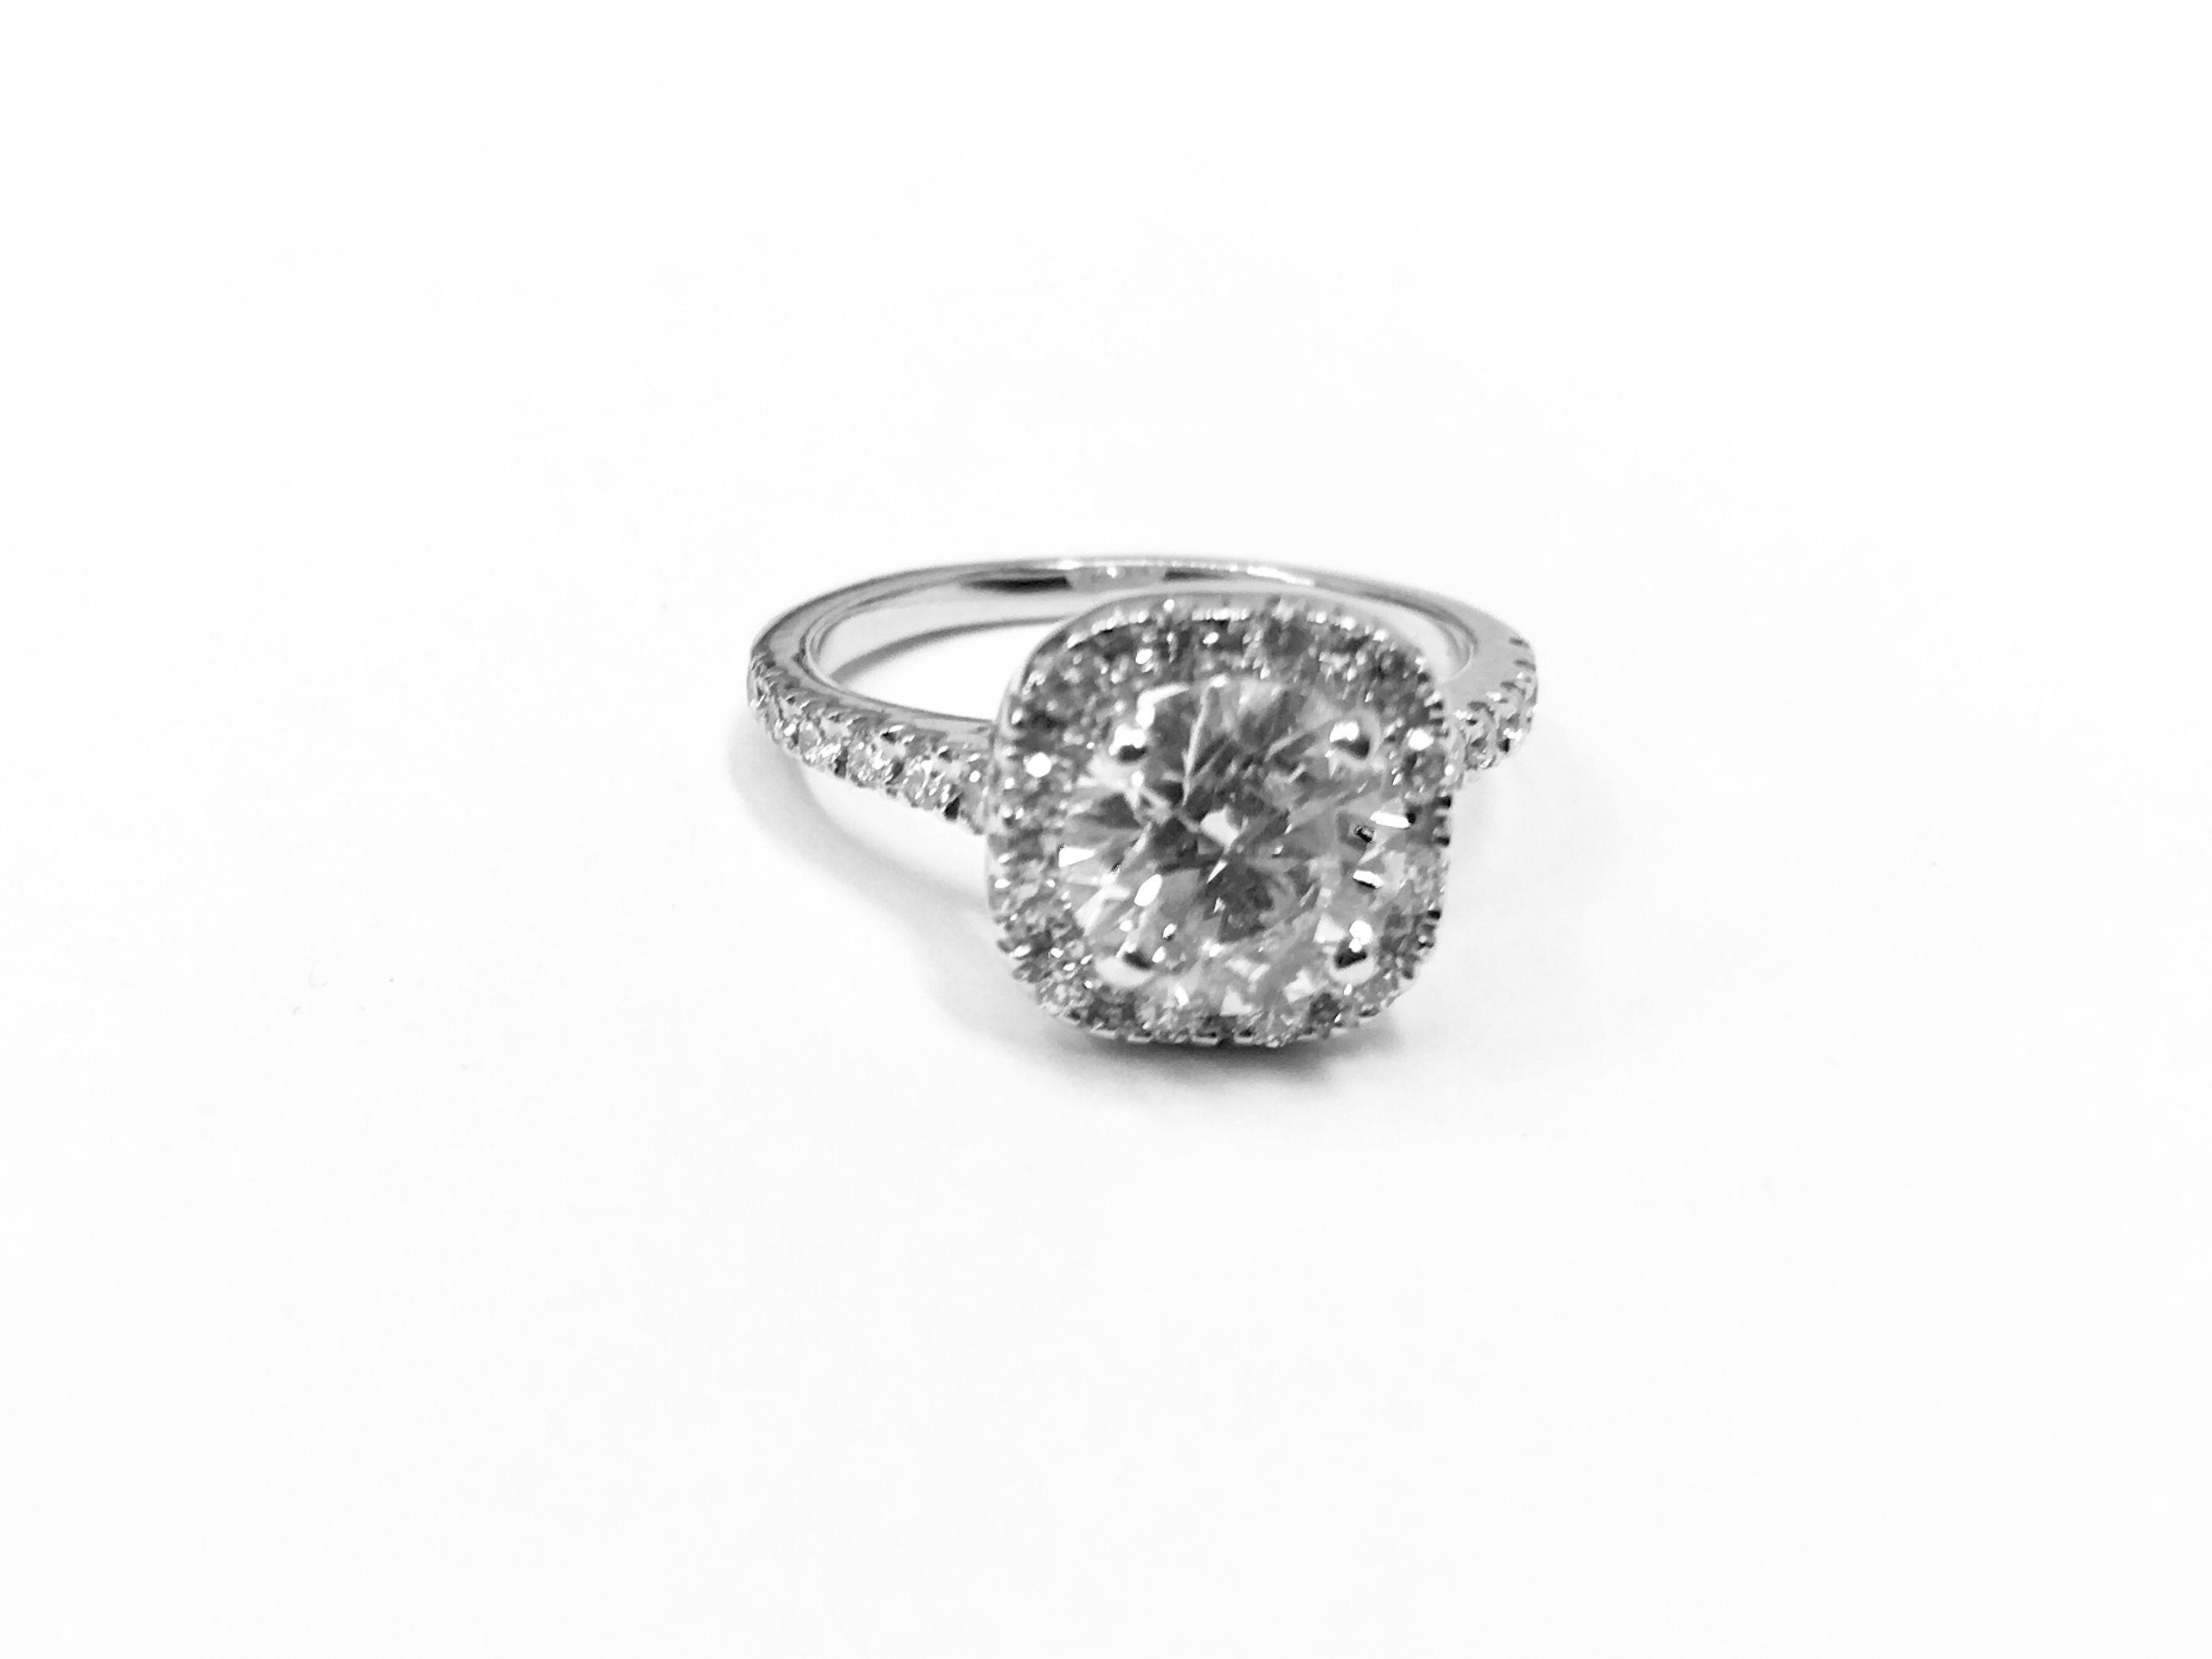 1.25ct diamond halo ring set in 18ct white gold - Image 5 of 24